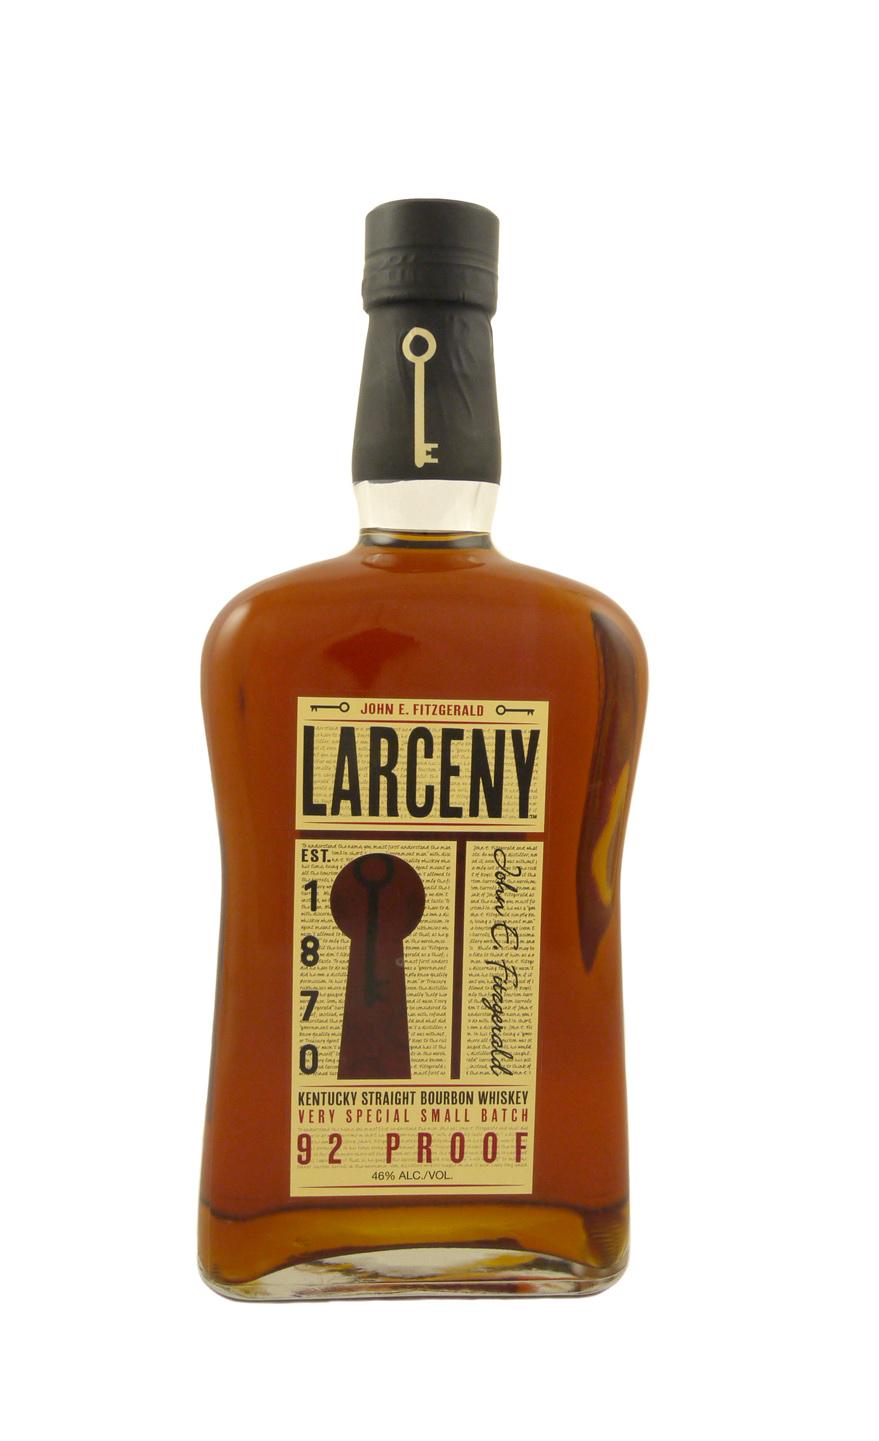 John E Fitzgerald Larceny Bourbon